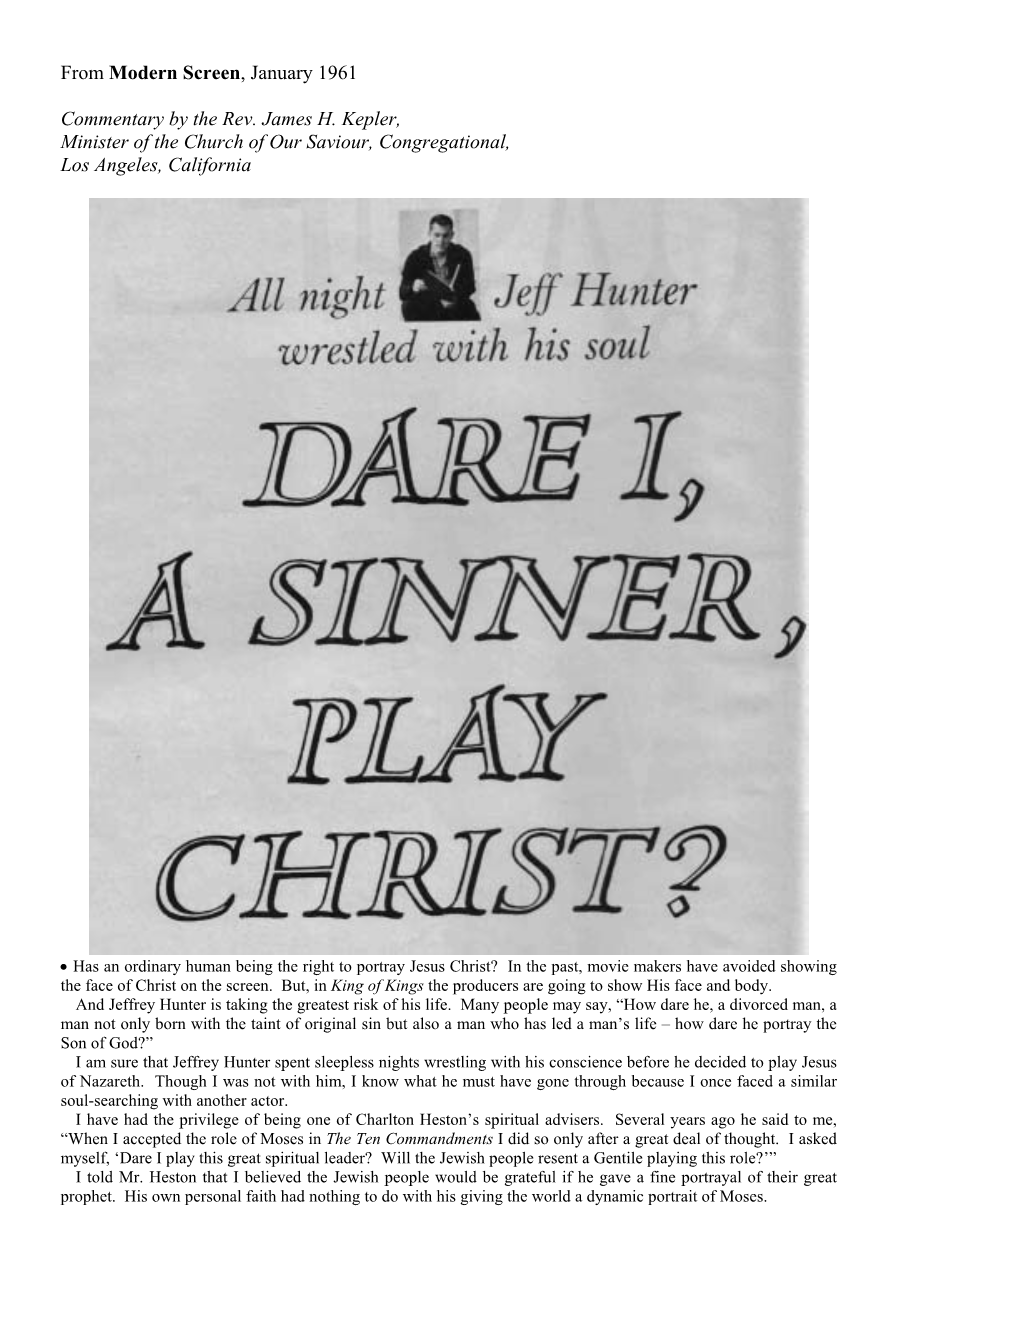 Dare I, a Sinner, Play Christ? (Original Magazine Format)